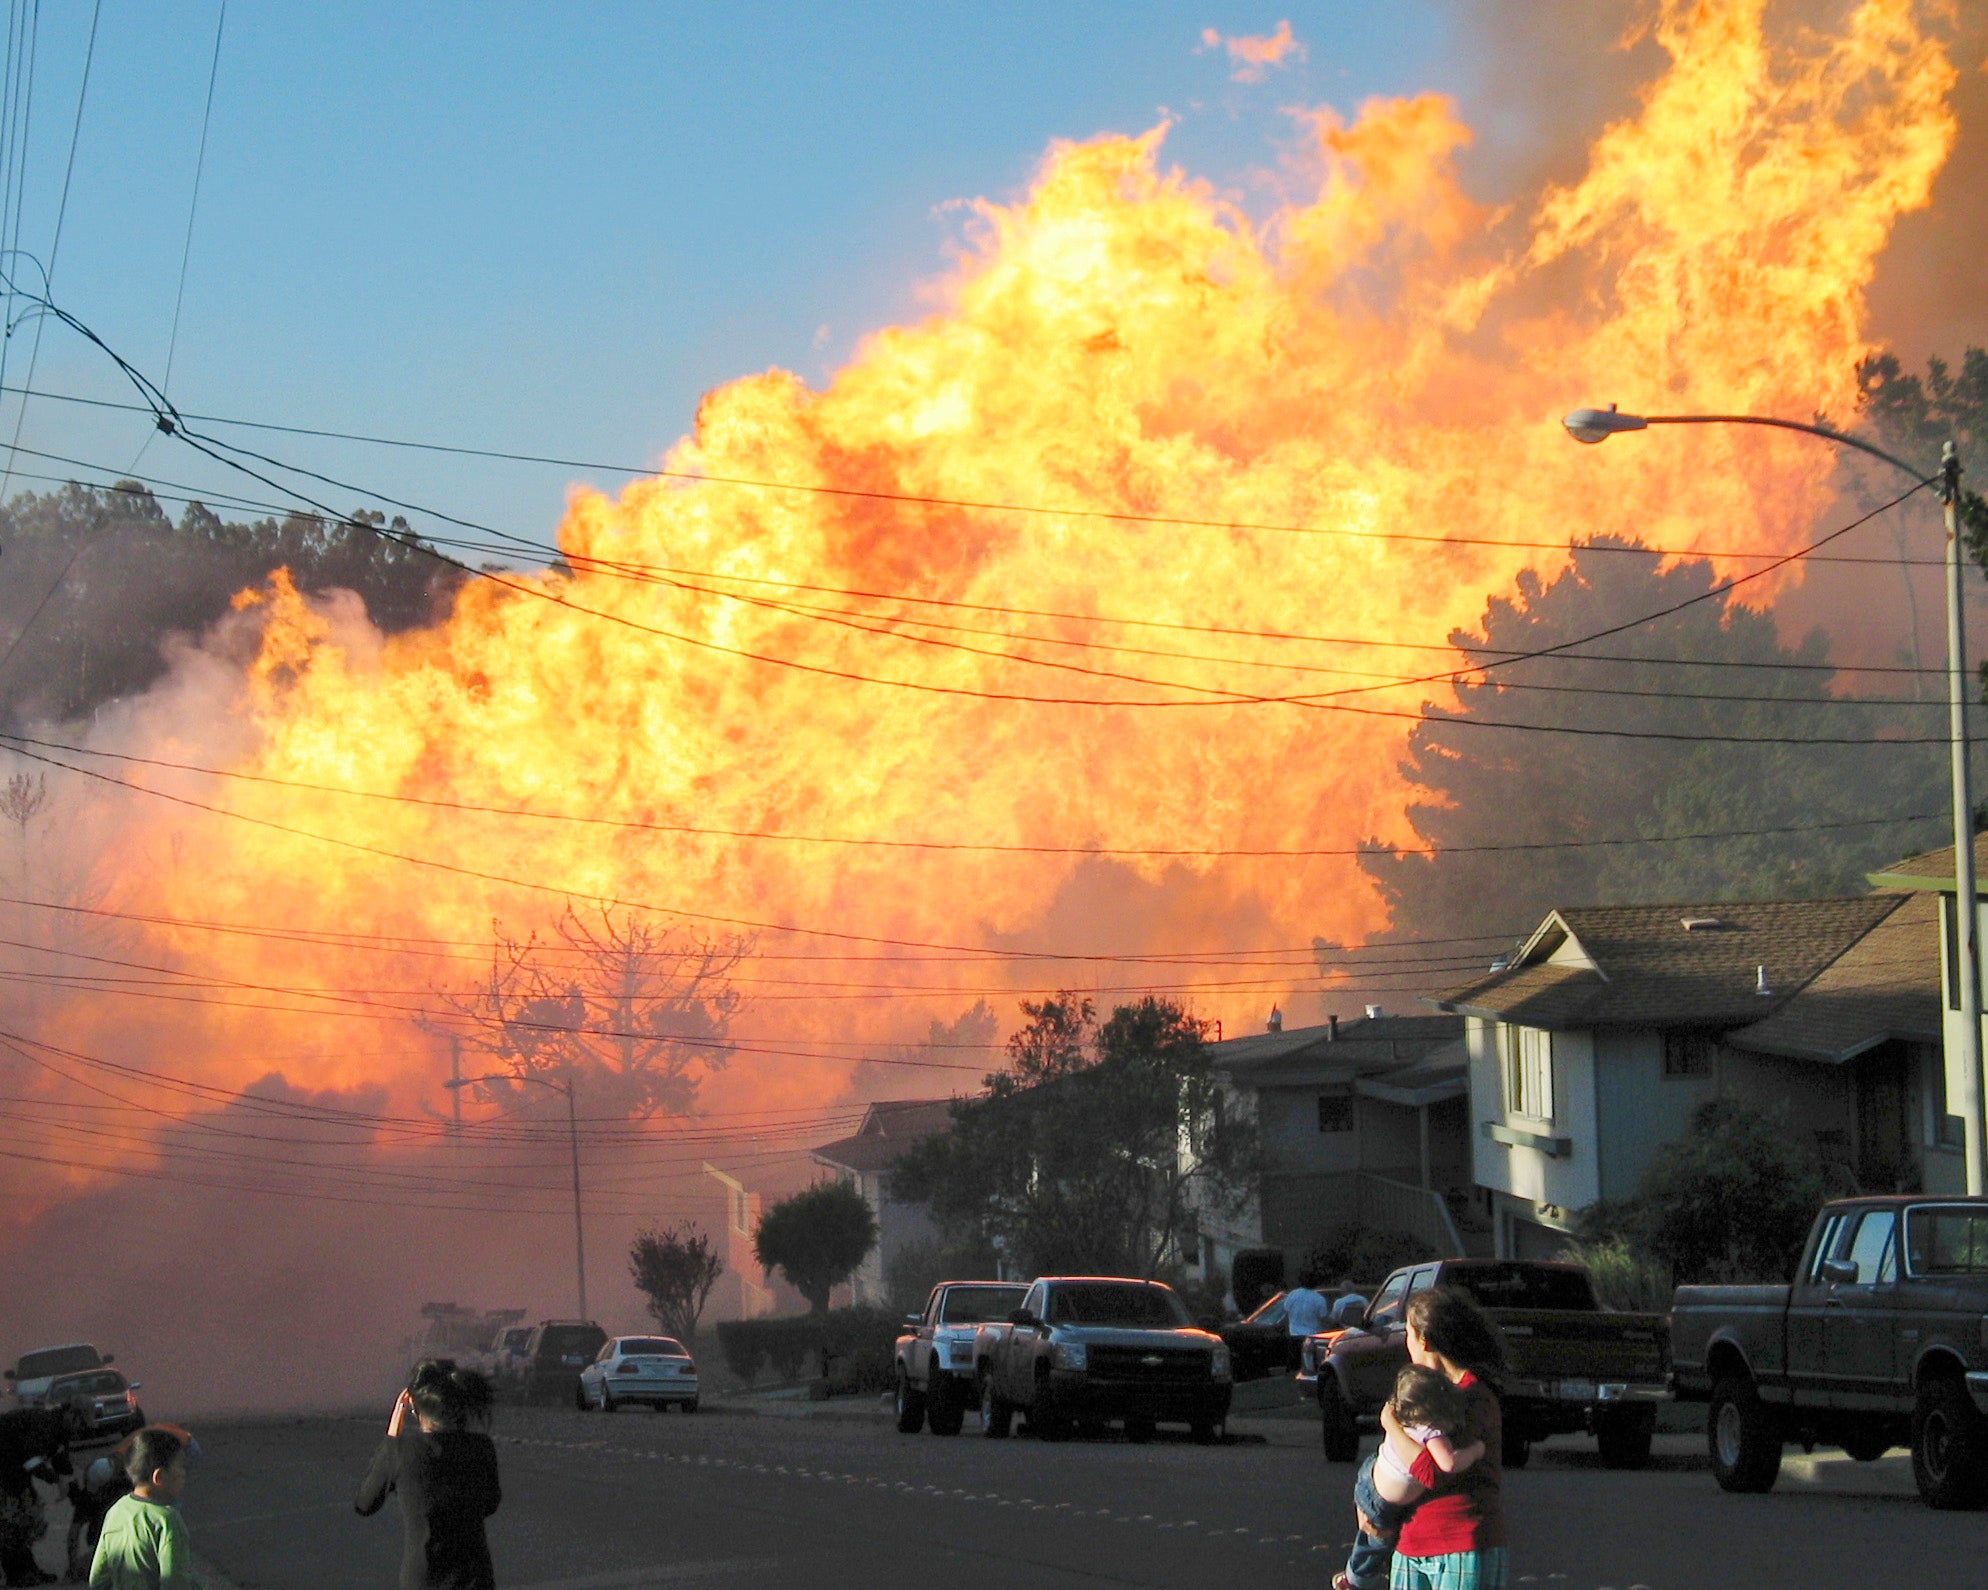 The 2010 pipeline explosion in San Bruno that injured Joseph Ruigomez